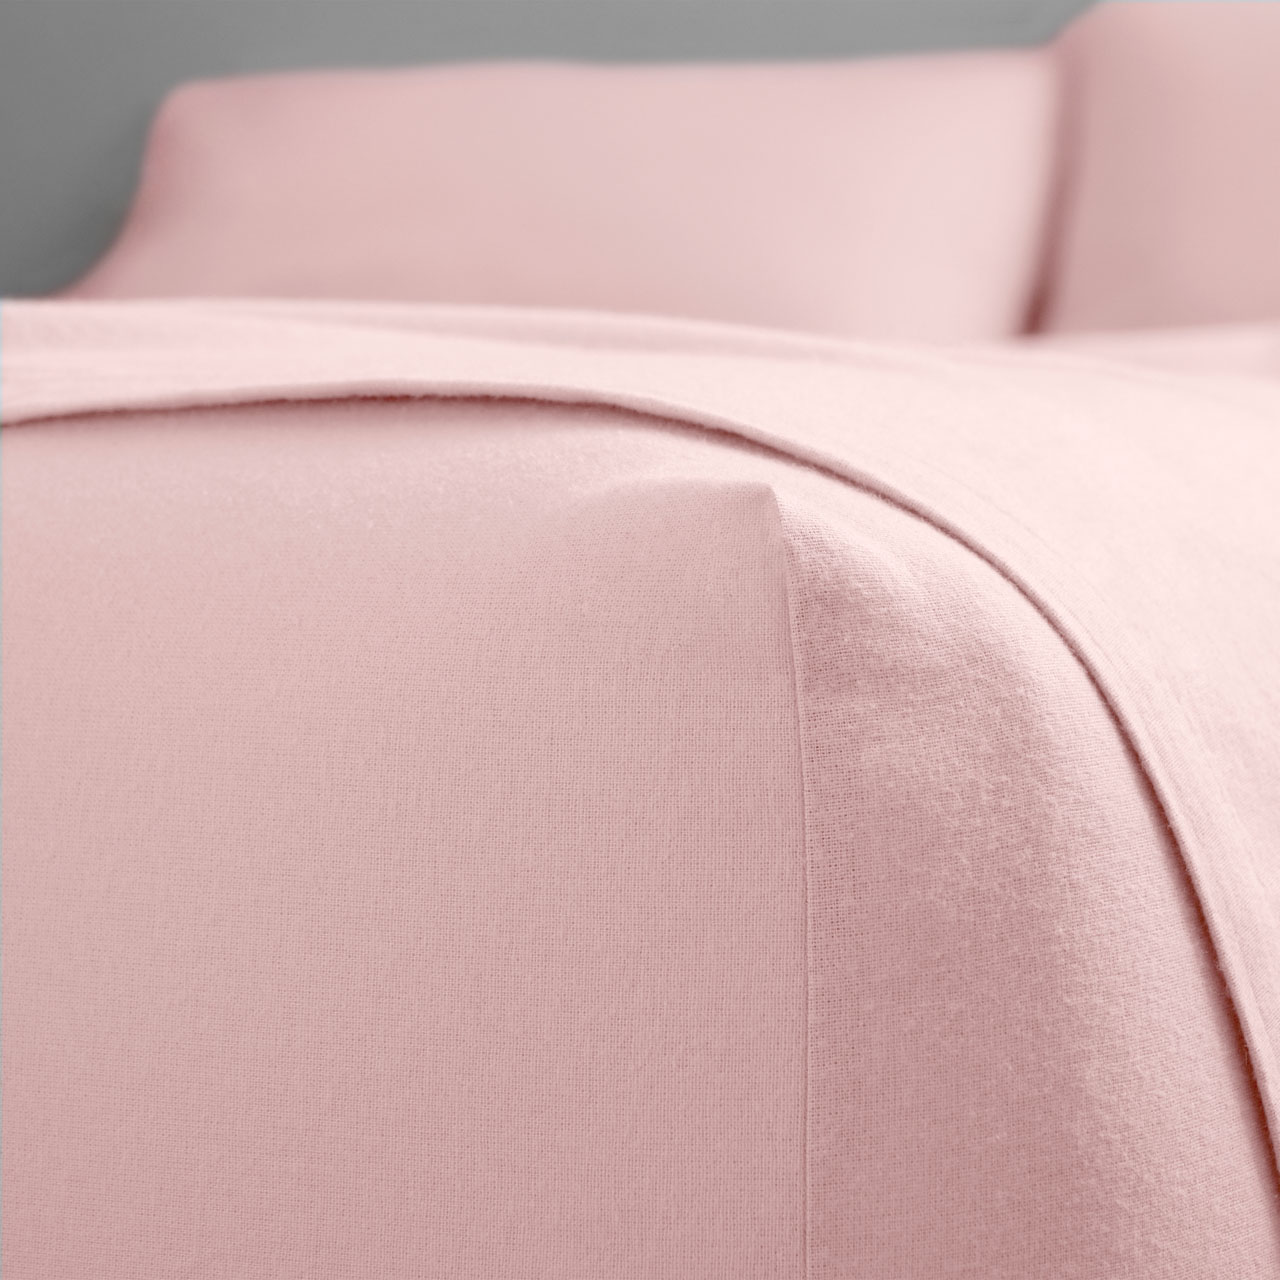 Cotton Flannelette Blush Pink Sheet Set - CoziCotton